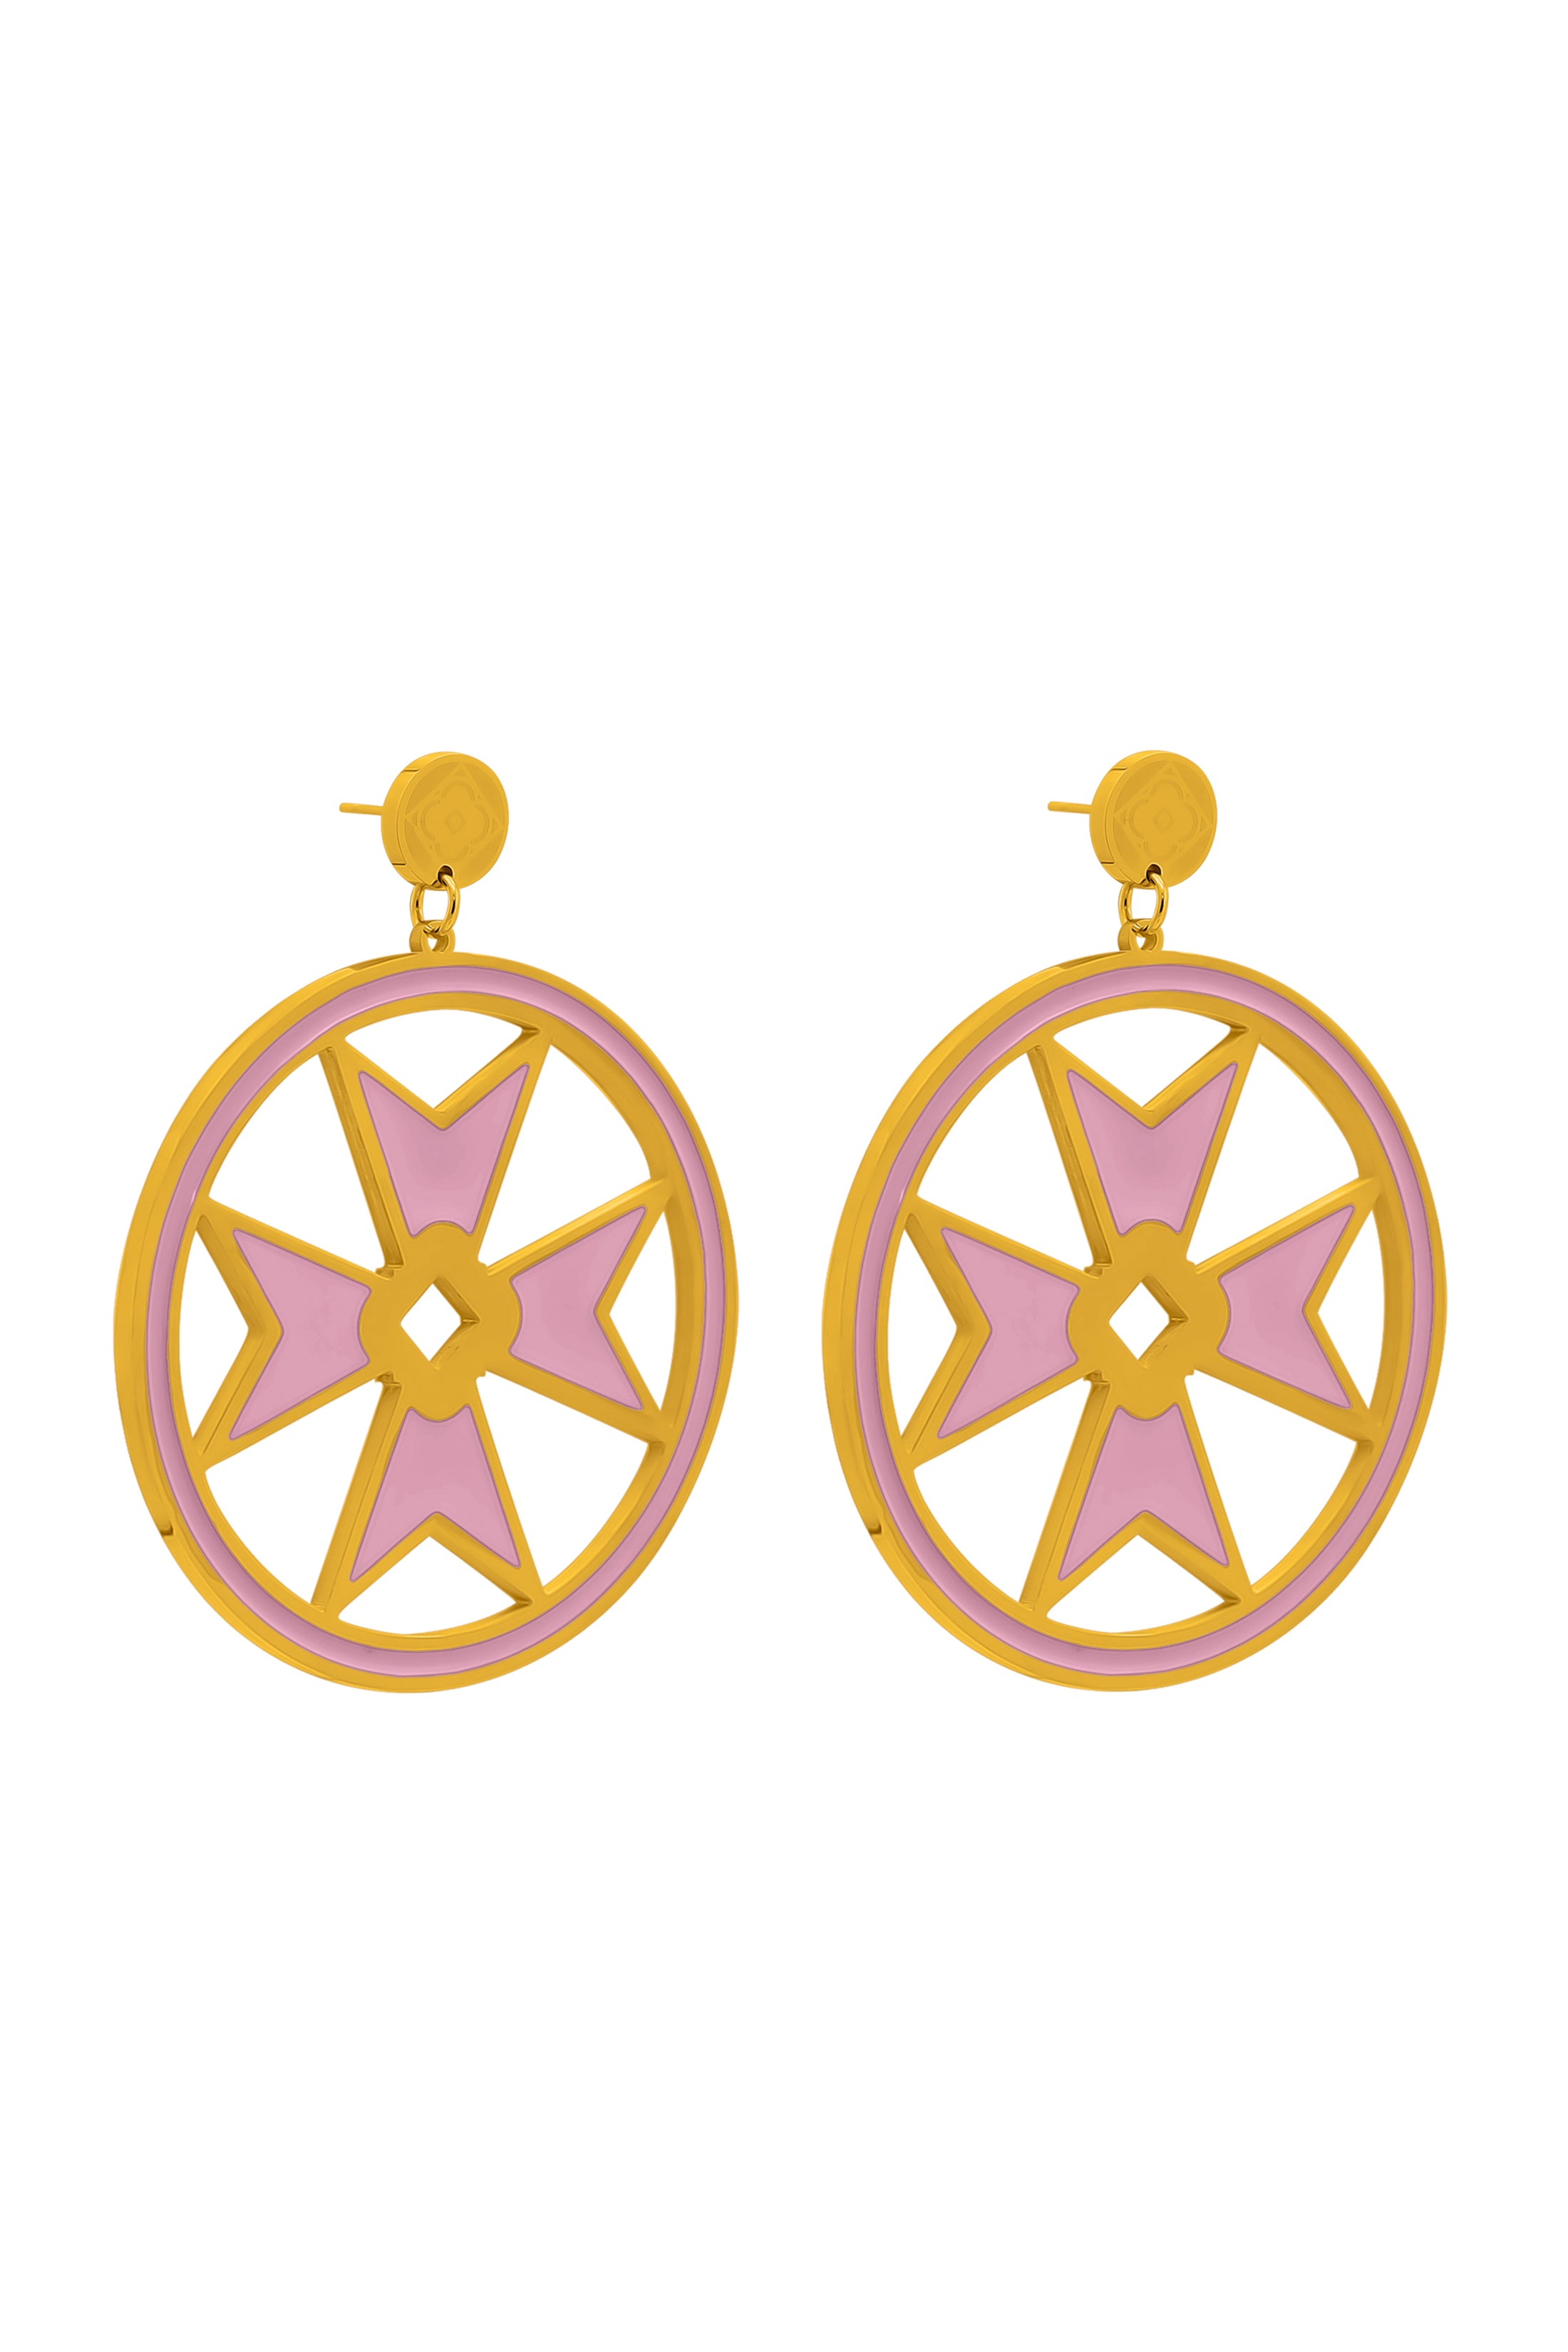 Catriona’s Large Maltese Cross Hoop Earring Set in Pink Enamel